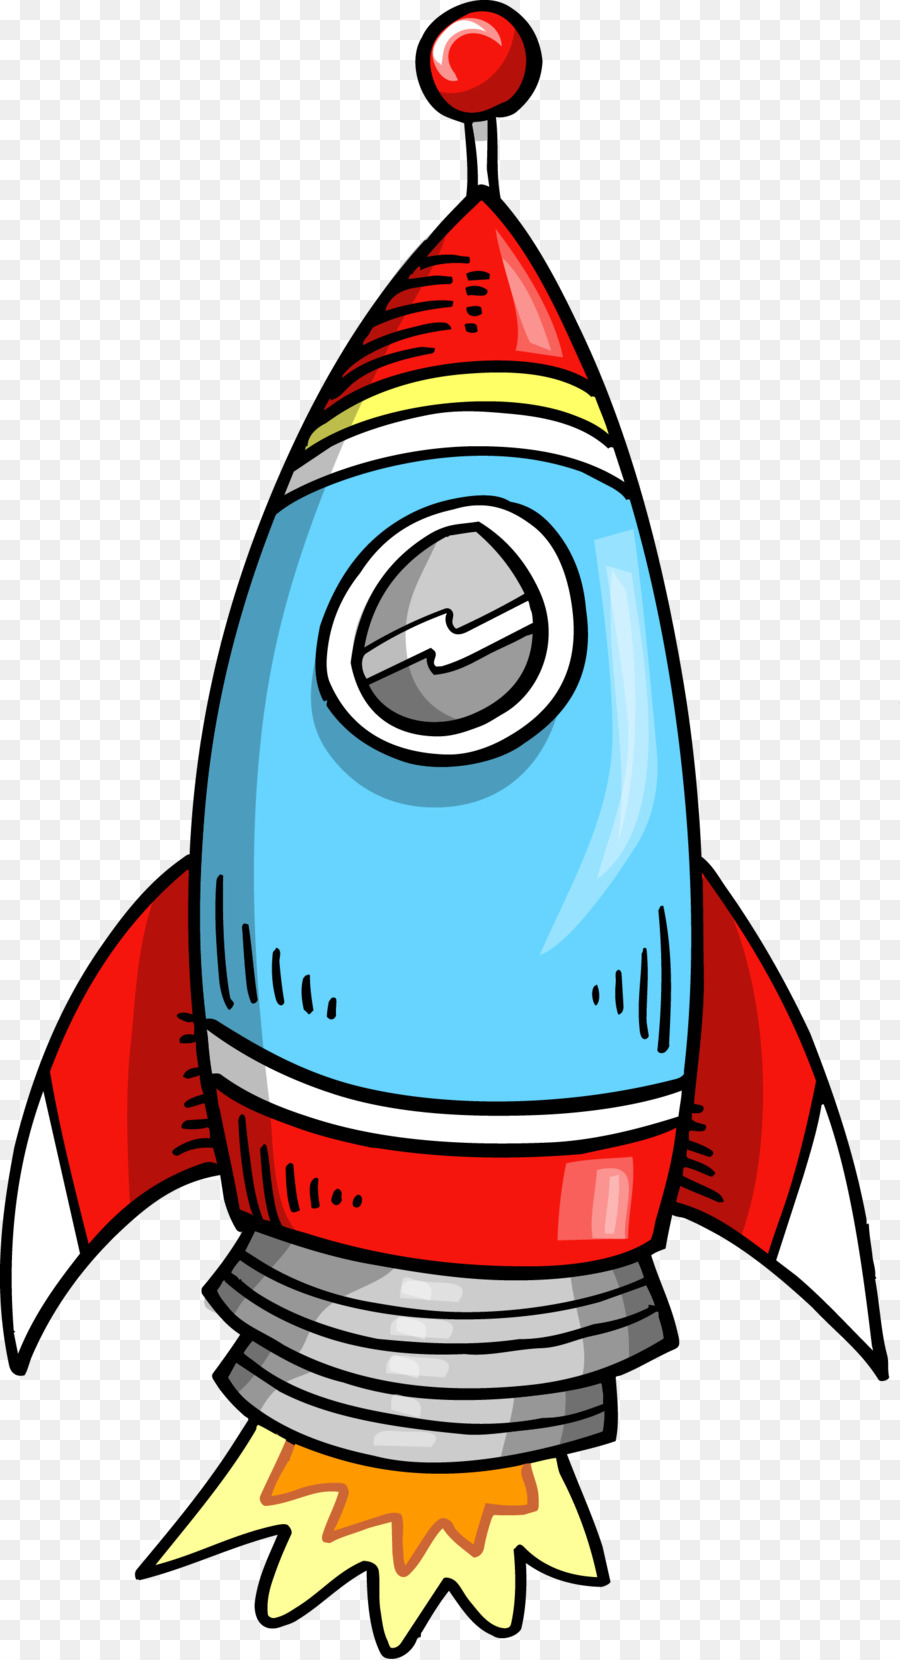 Q-version Rakete Cartoon Clip art - Vektor-cartoon-rot und blau-Rakete